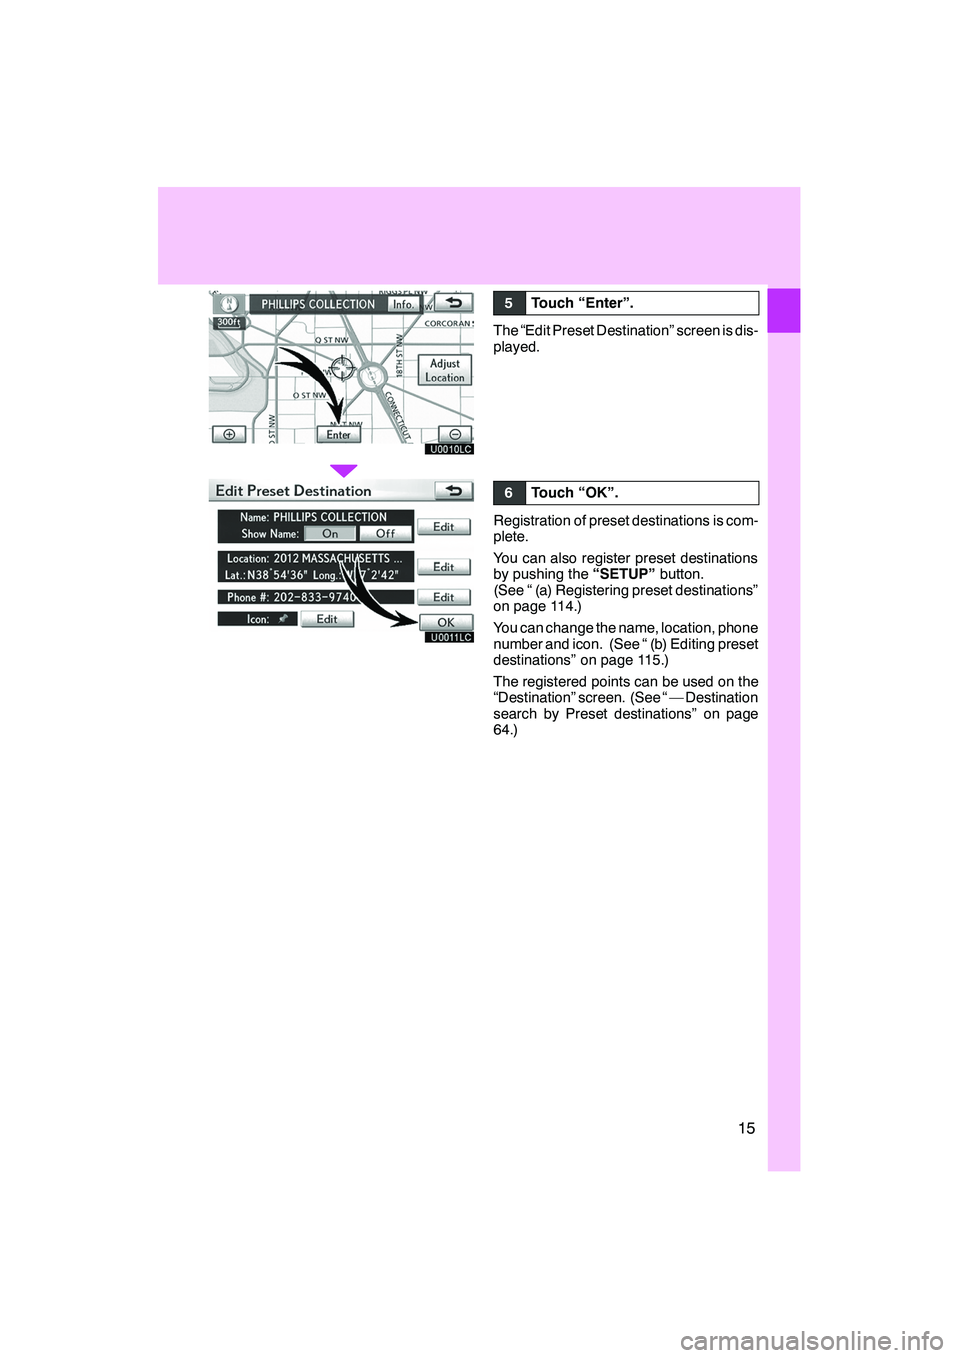 Lexus IS250 2012  Navigation Manual 15
U0010LC
U0011LC
5Touch “Enter”.
The “Edit Preset Destination” screen is dis-
played.
6Touch “OK”.
Registration of preset destinations is com-
plete.
You can also register preset destina